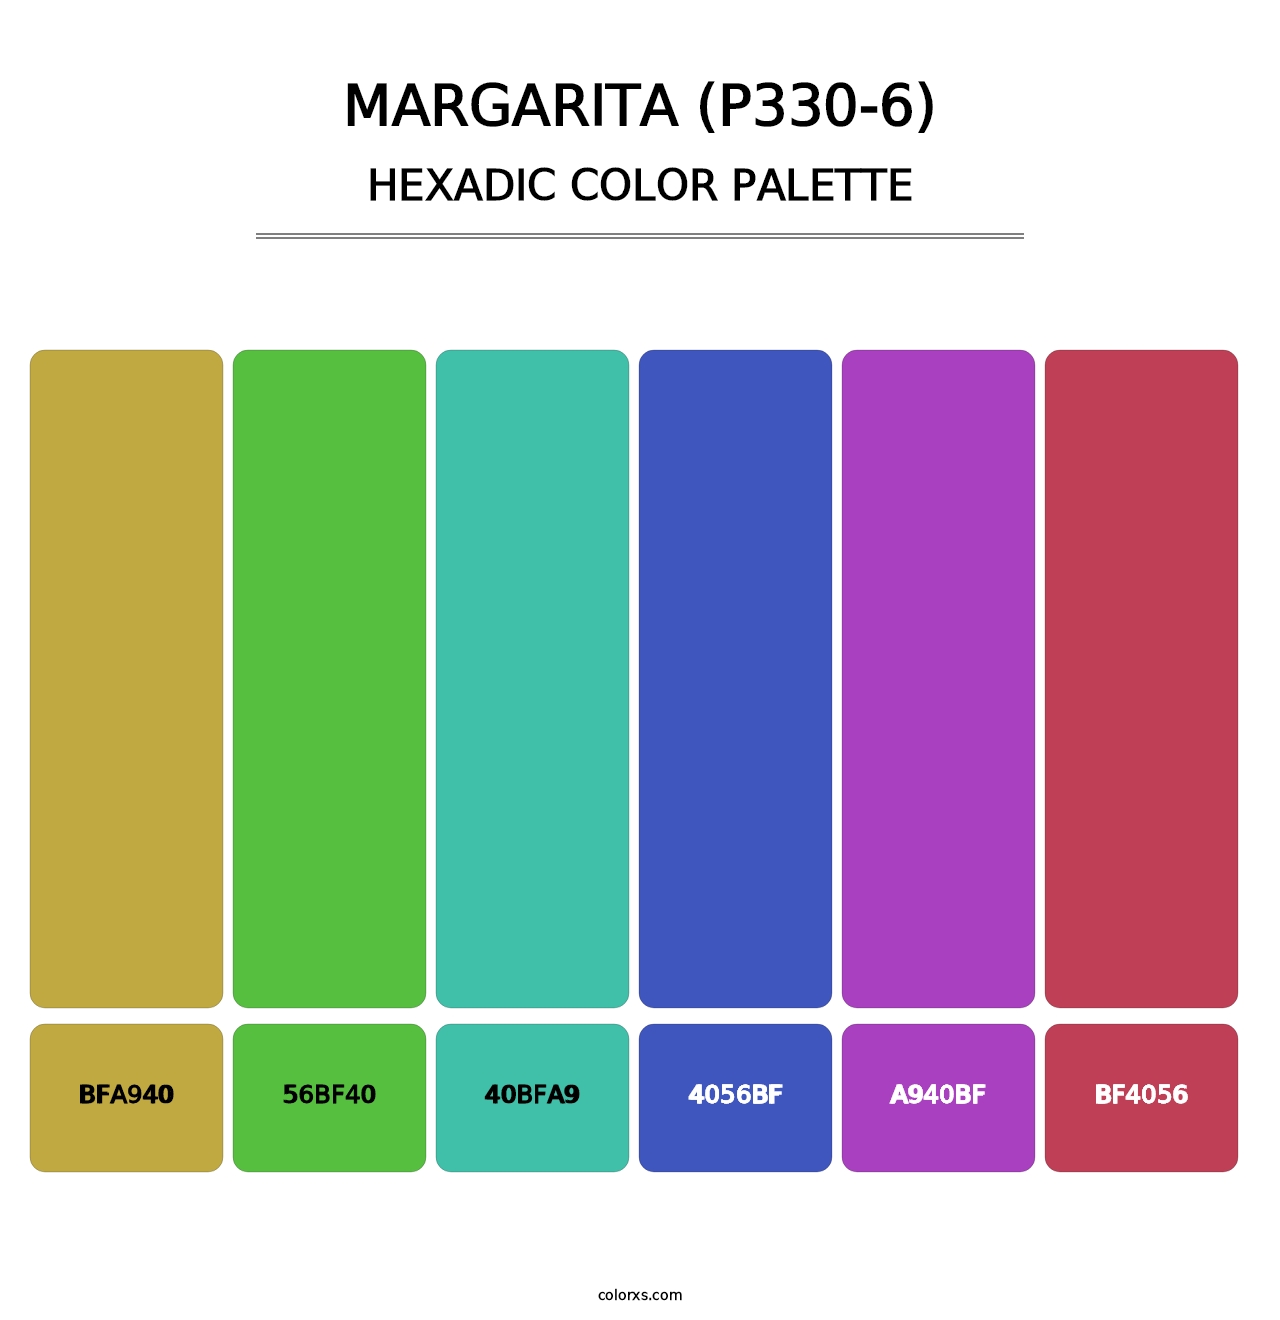 Margarita (P330-6) - Hexadic Color Palette